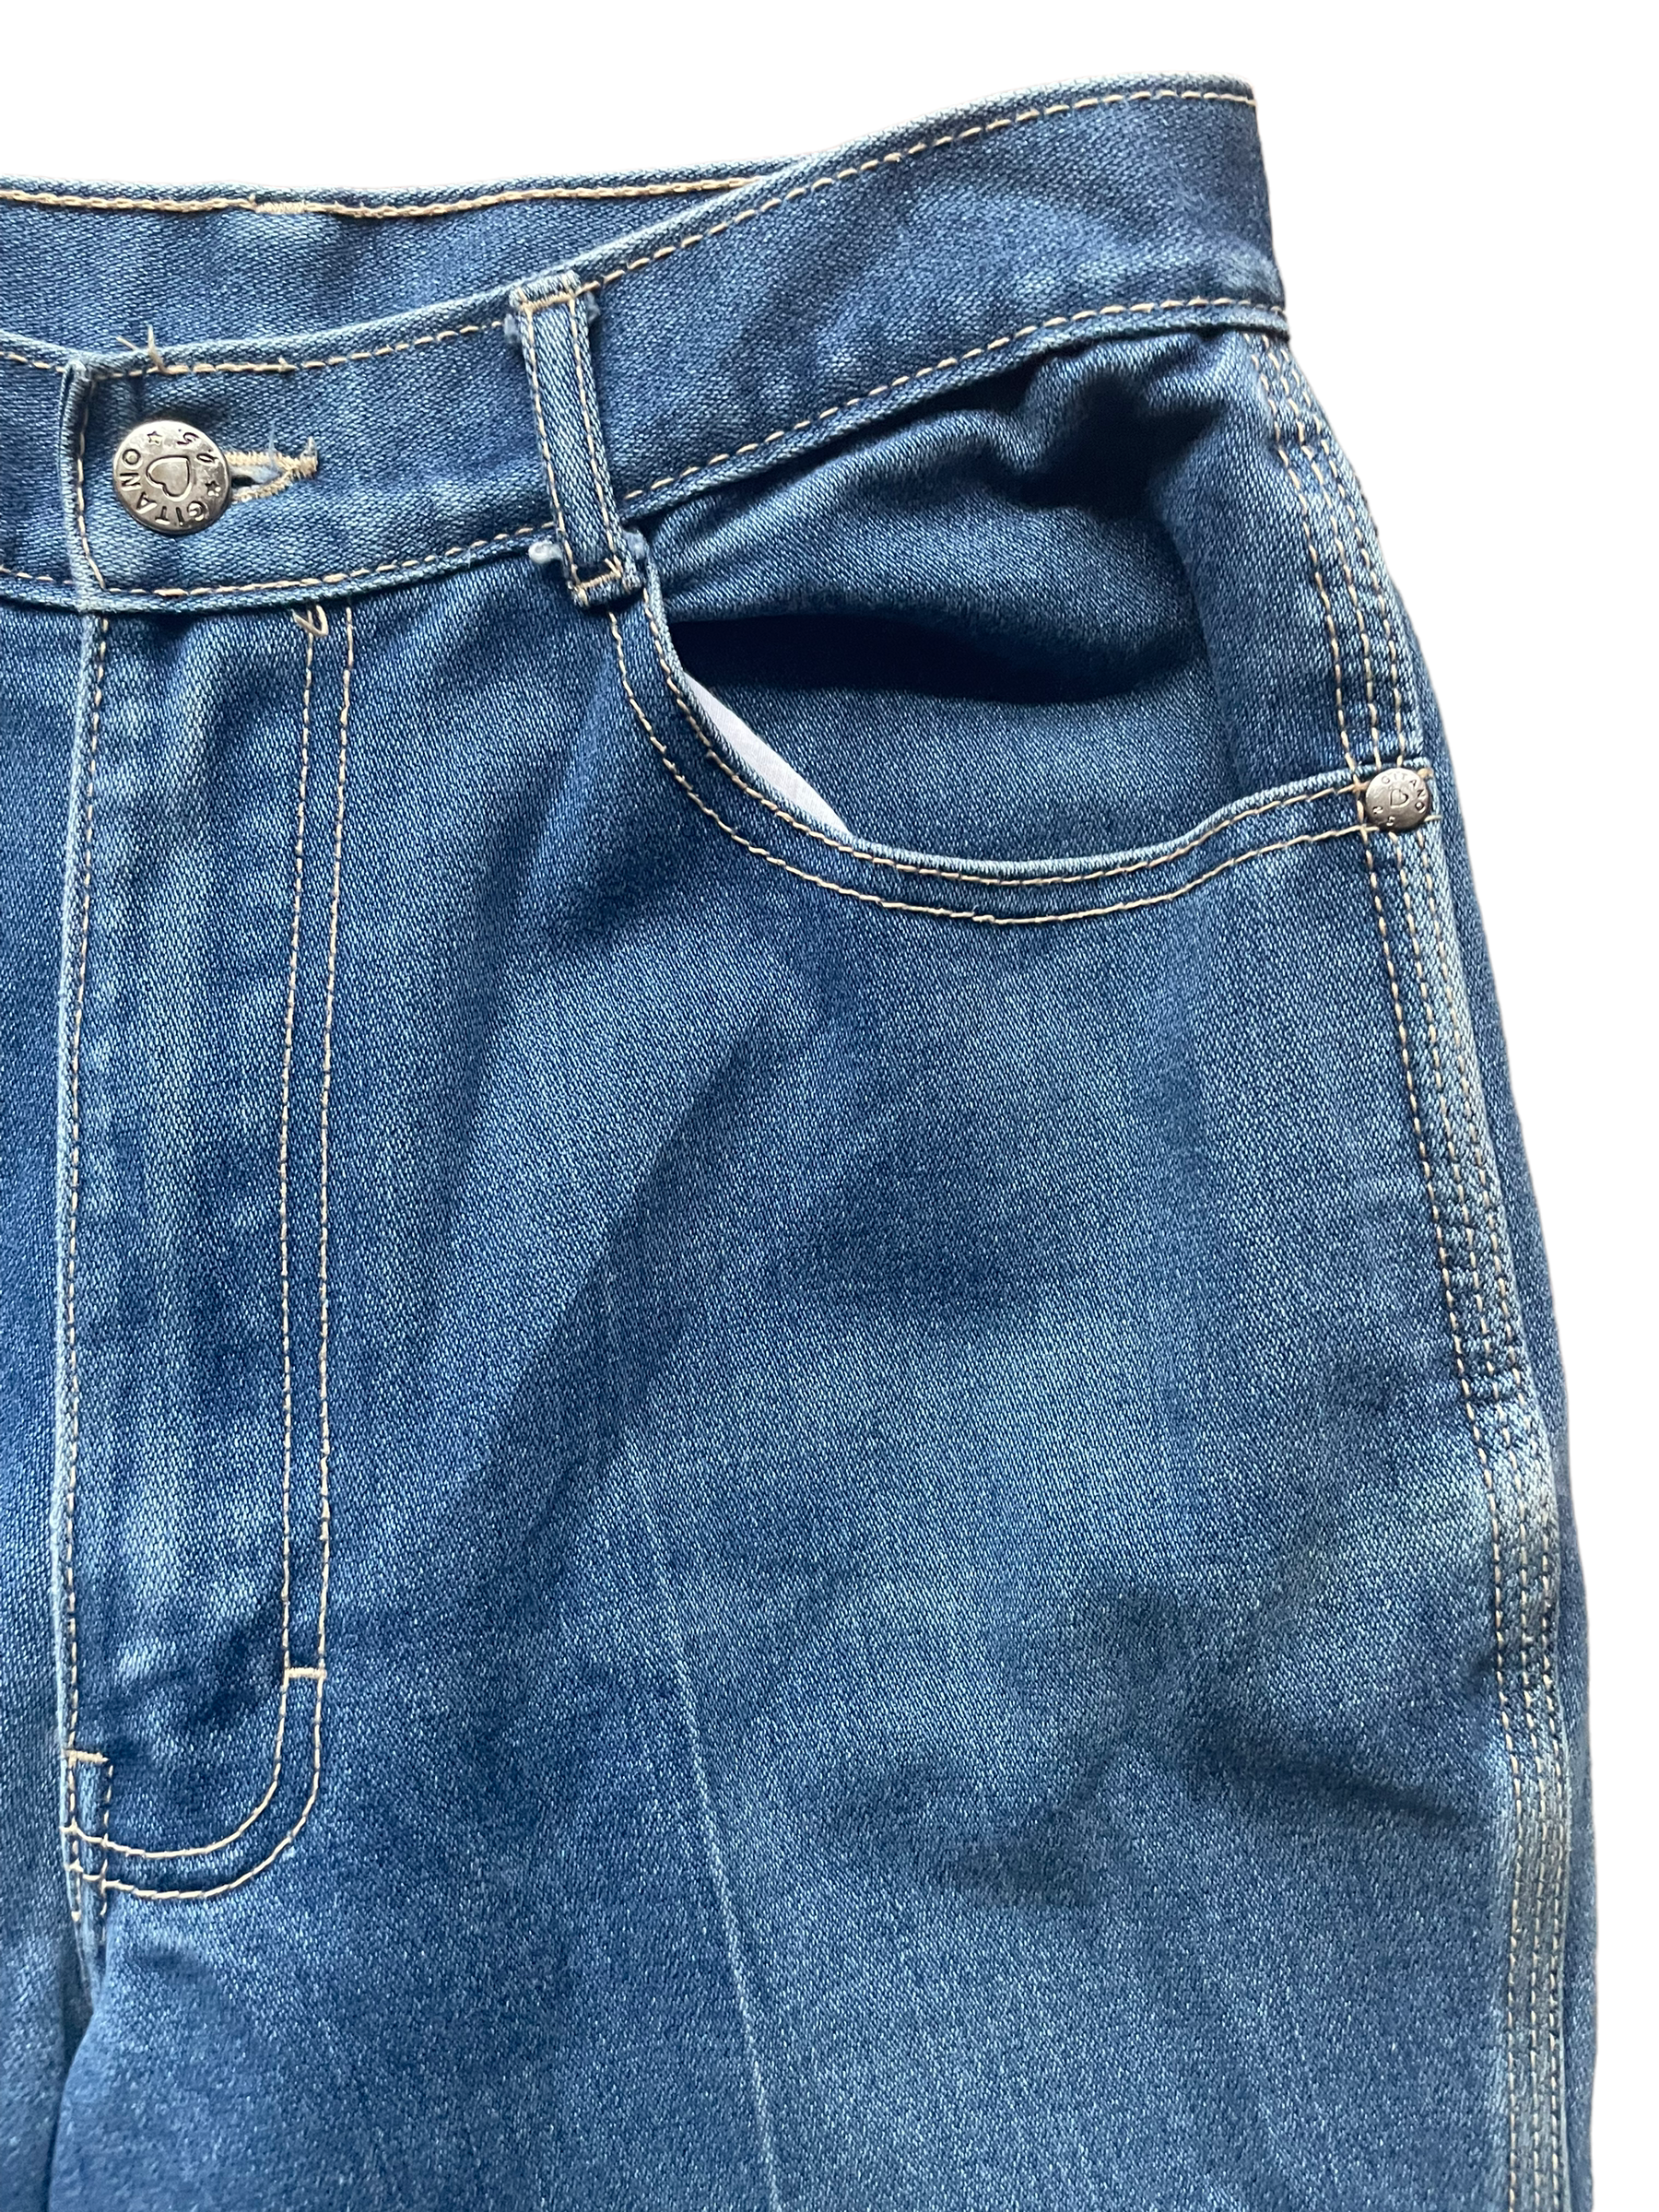 Women's New Fashion Women's Ladies Denim Pencil Pants Boyfriend Style  Ripped Jeans Skinny Denim Jeans for Female | Wish